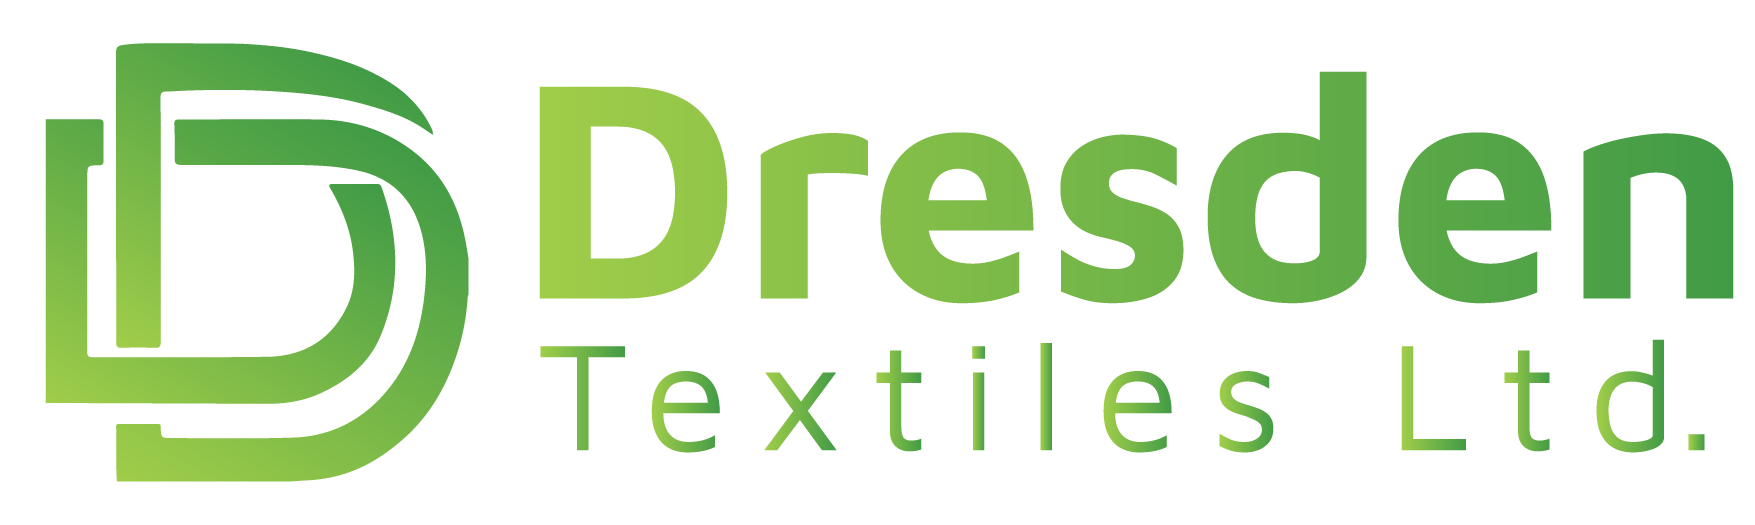 Textile Logo Template Editable Design to Download